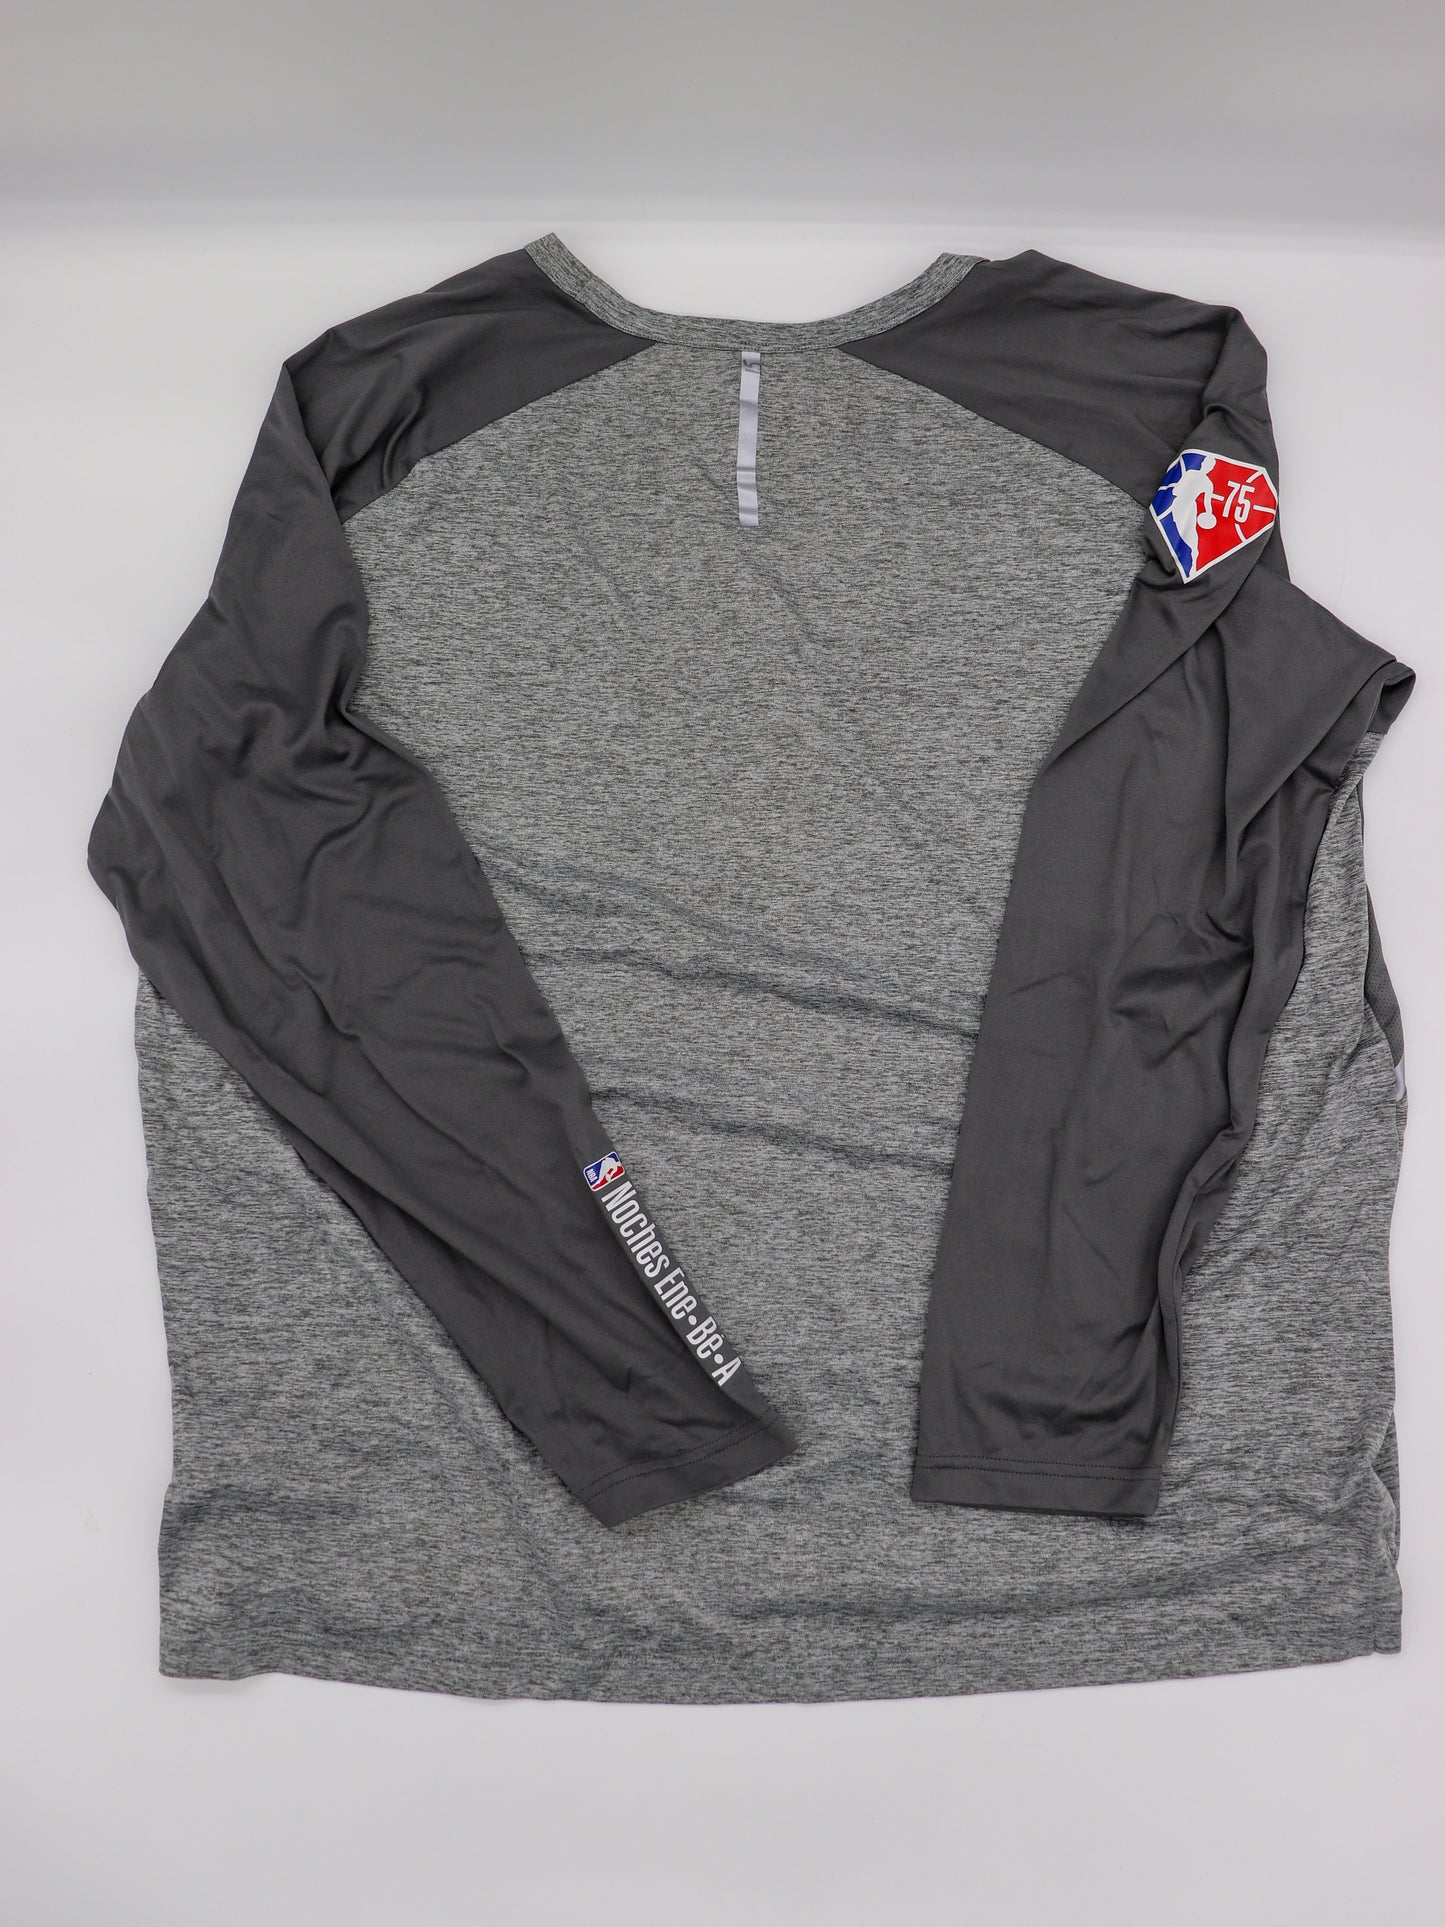 Back-To-Back NBA M.V.P. Nikola Jokic Denver Nuggets Game Worn Shooting/Warm-Up Shirt